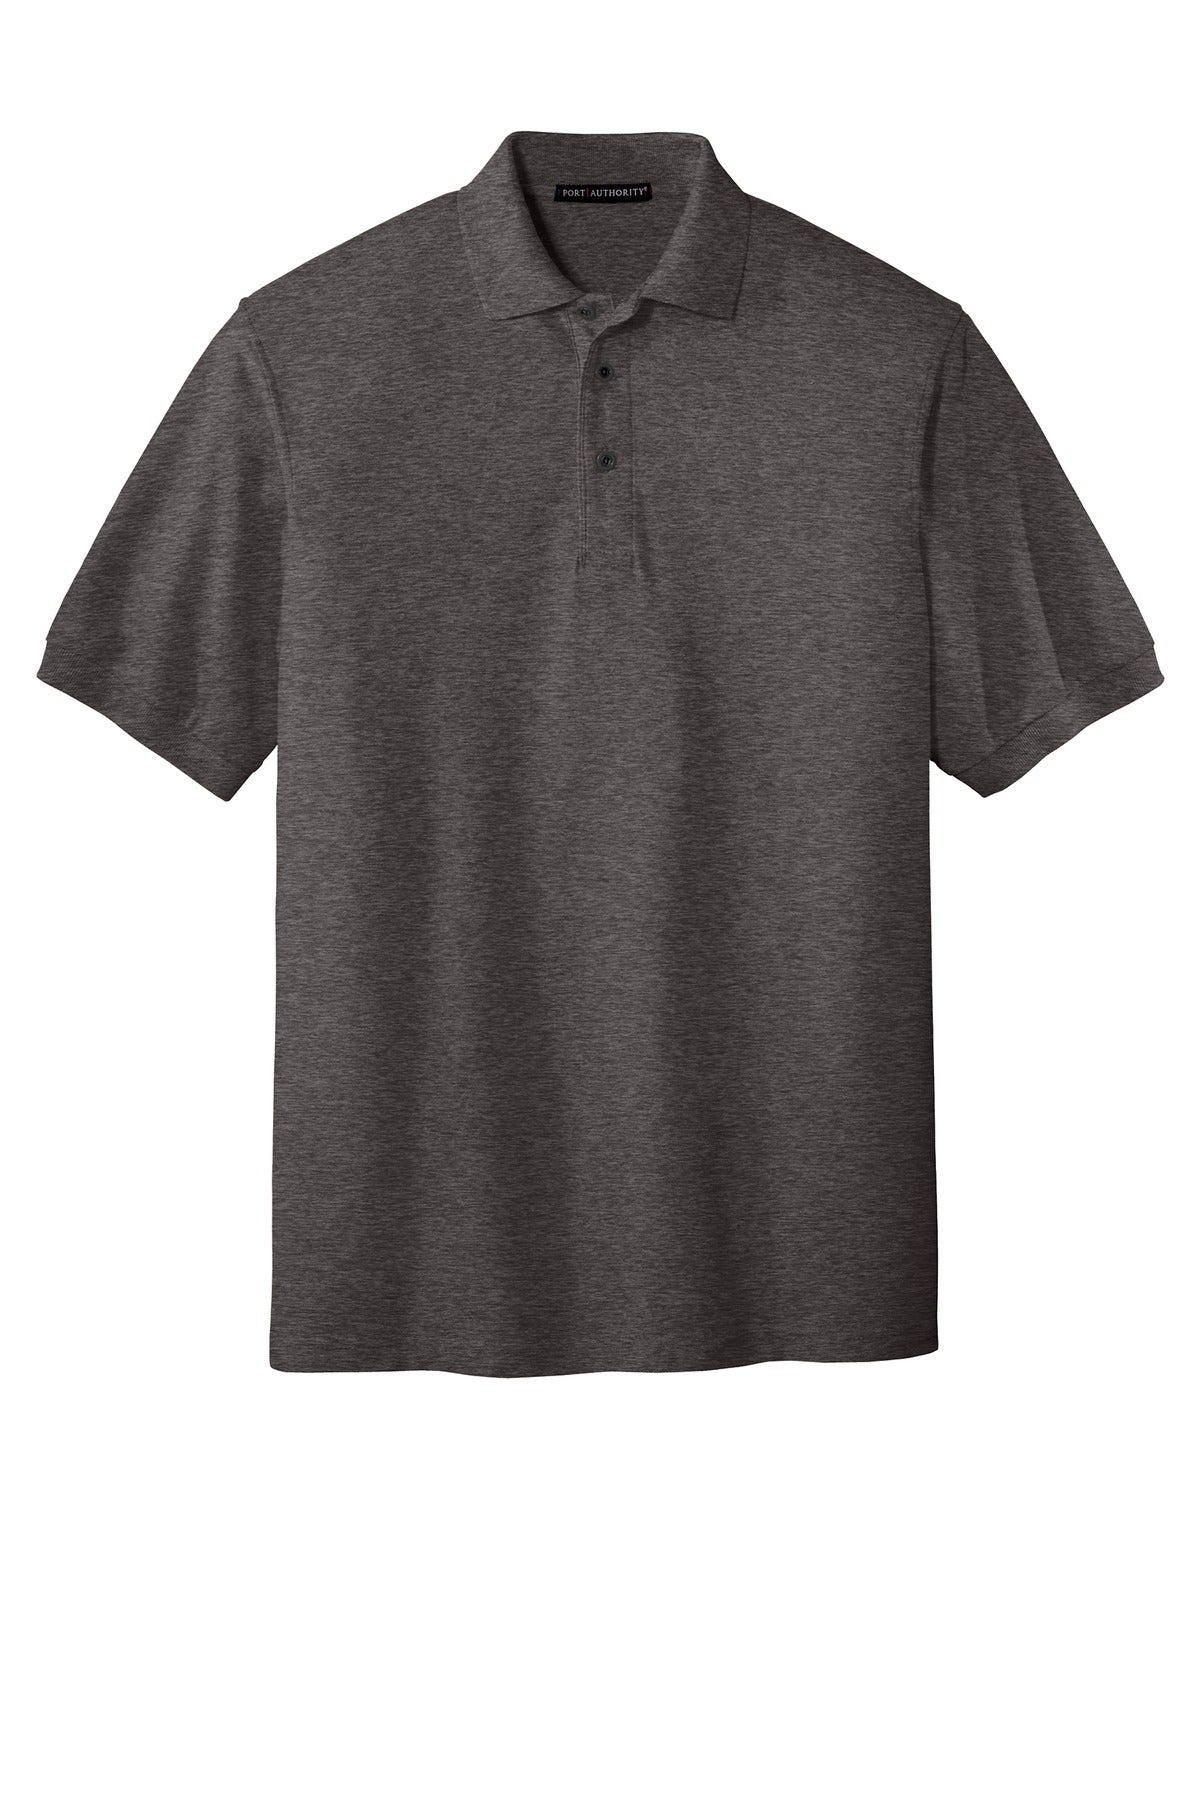 [Custom] Cotton Blend Polo (Unisex) (Colors: Black, White Grey, Reds) [K500]